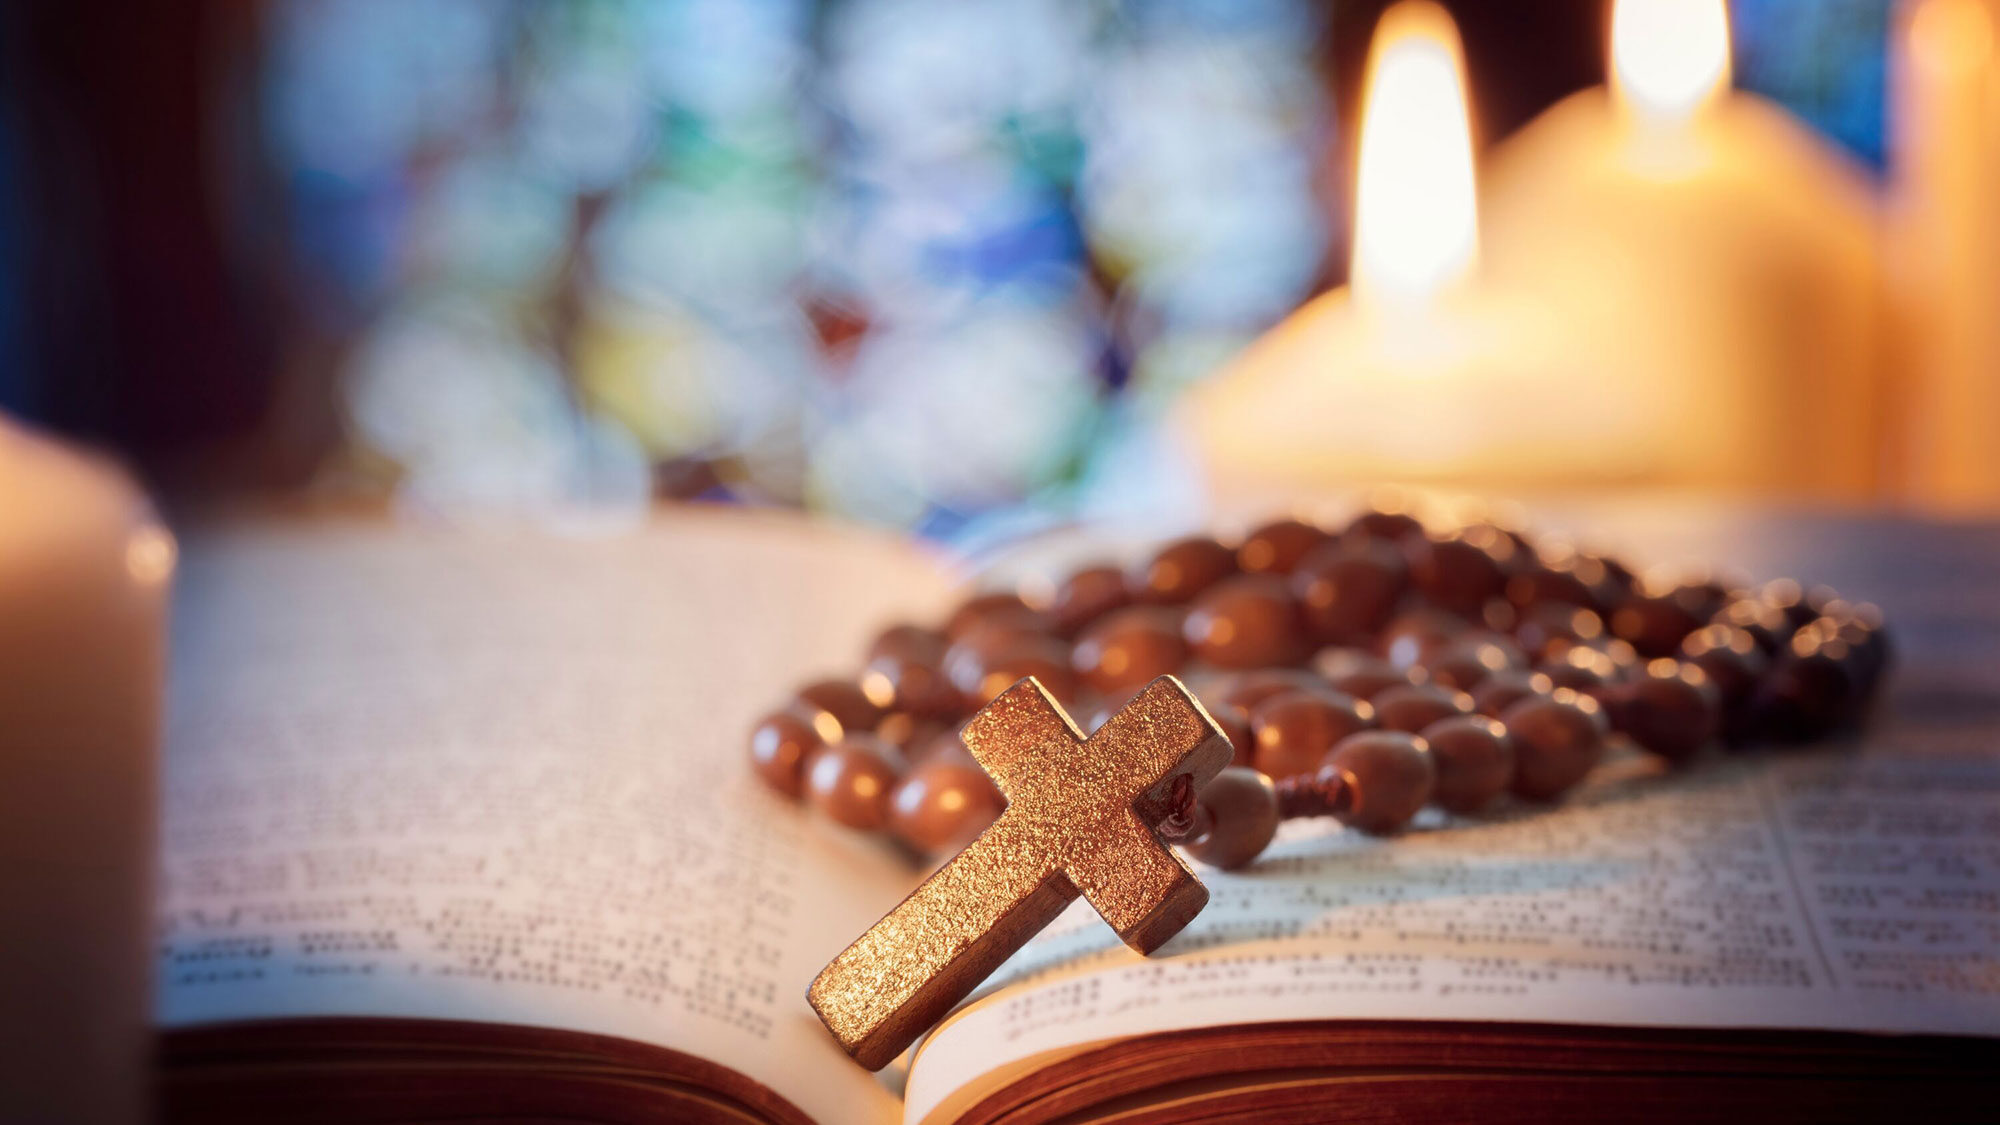 Betet man so richtig den Rosenkranz? (Kirche, katholisch, Gebet)